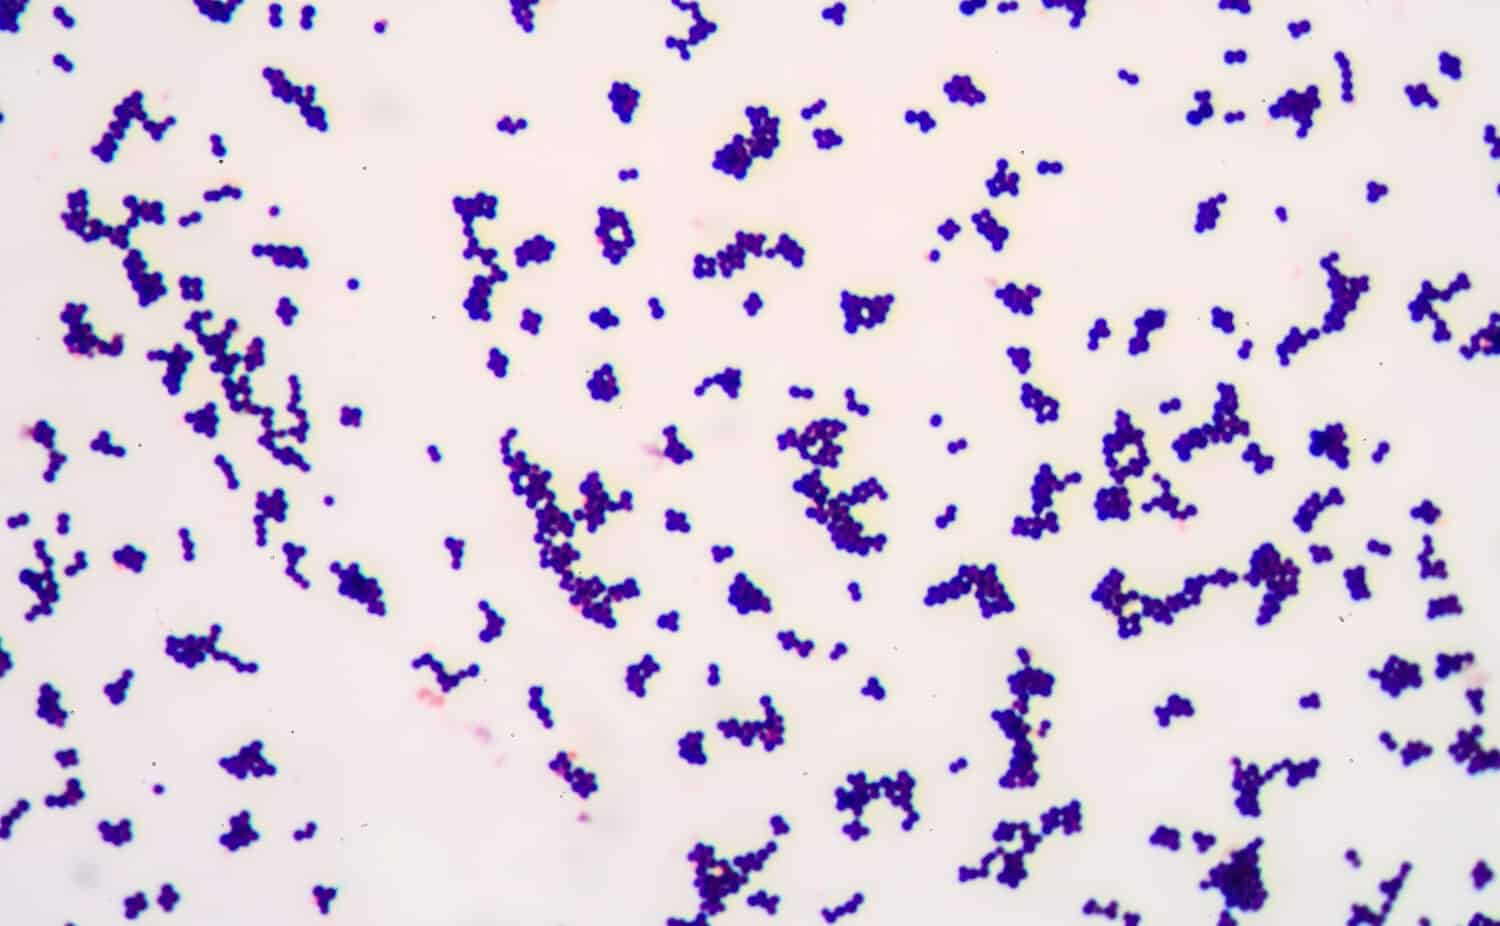 Gram staining reveals Gram-positive bacteria.